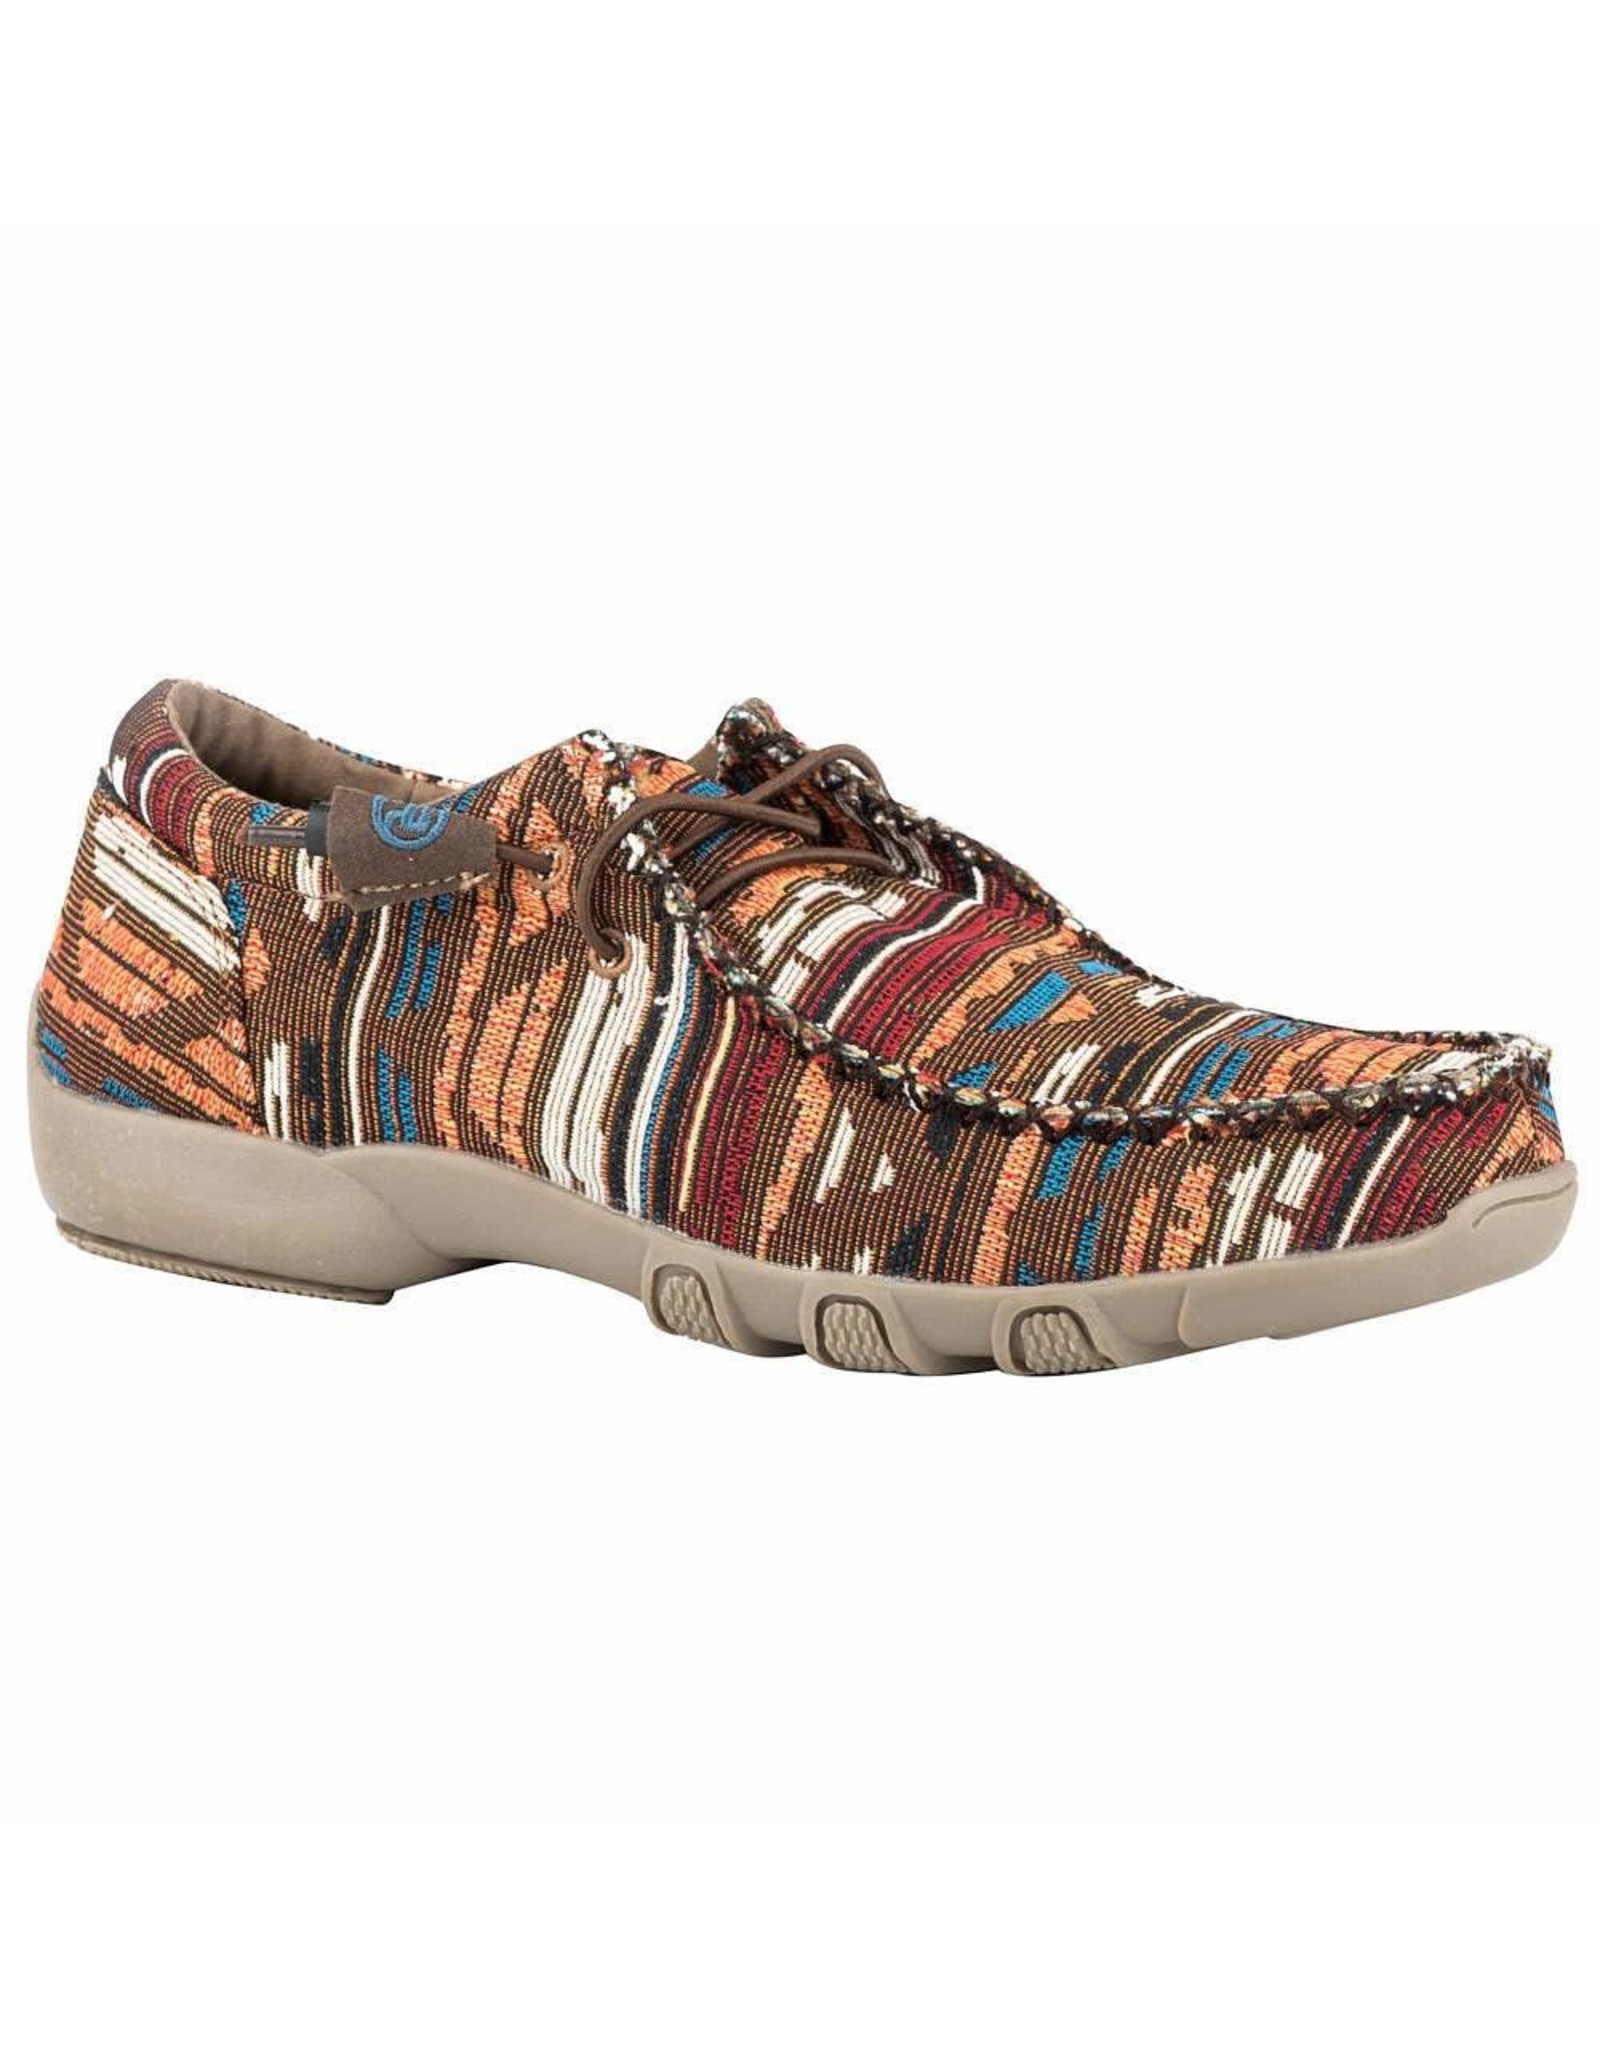 Roper Ladies Chillin Aztec 09-021-1791-2699 Brown/Burnt Orange Casual Shoes